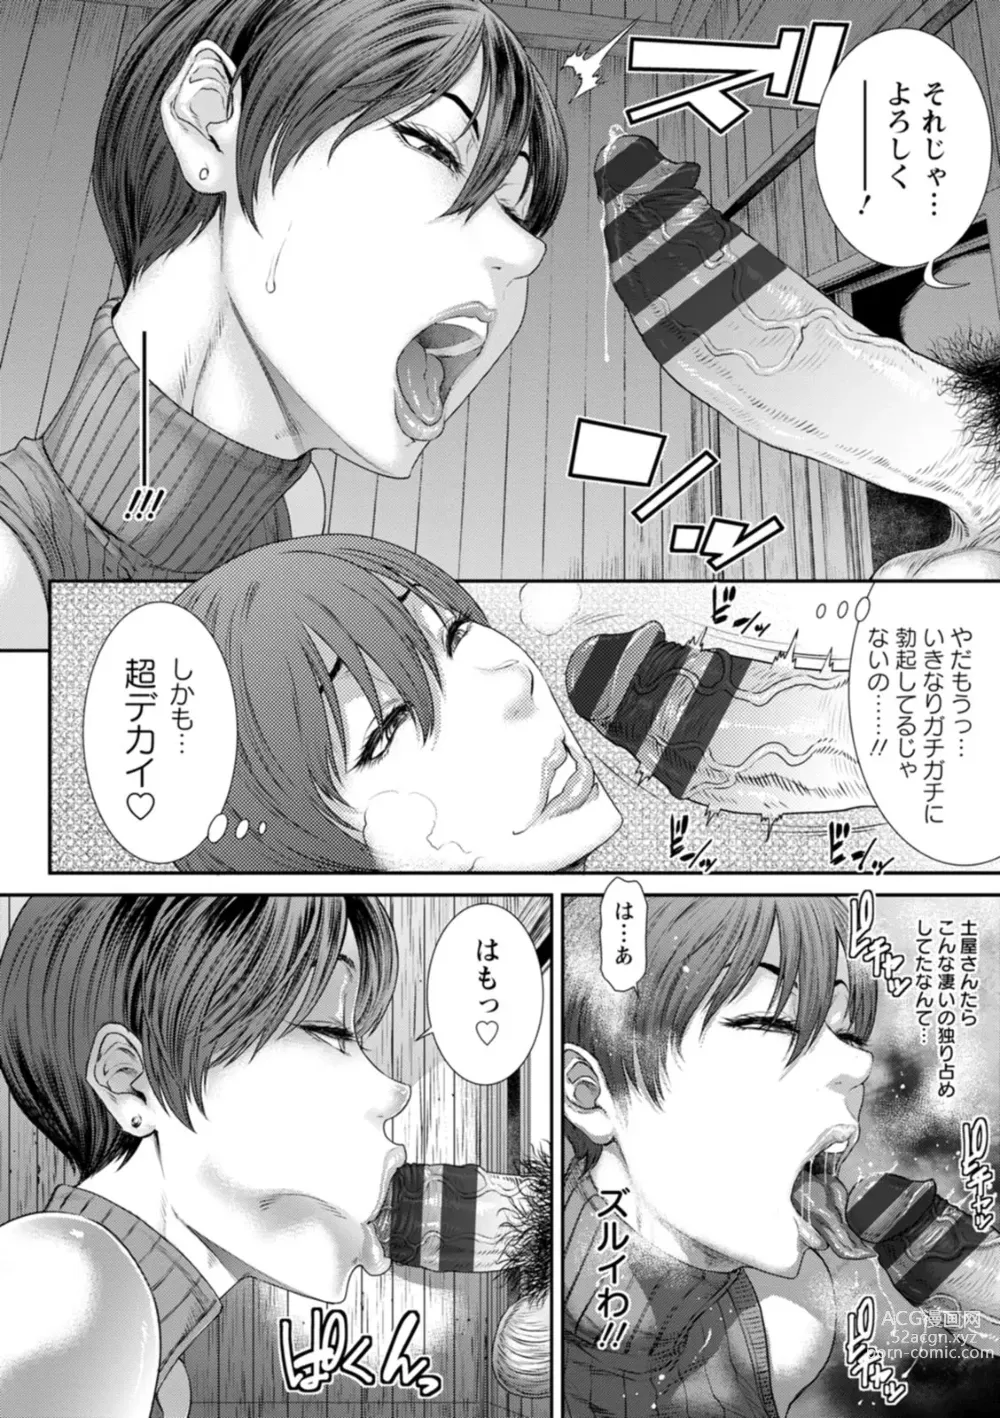 Page 12 of manga Obscene Box